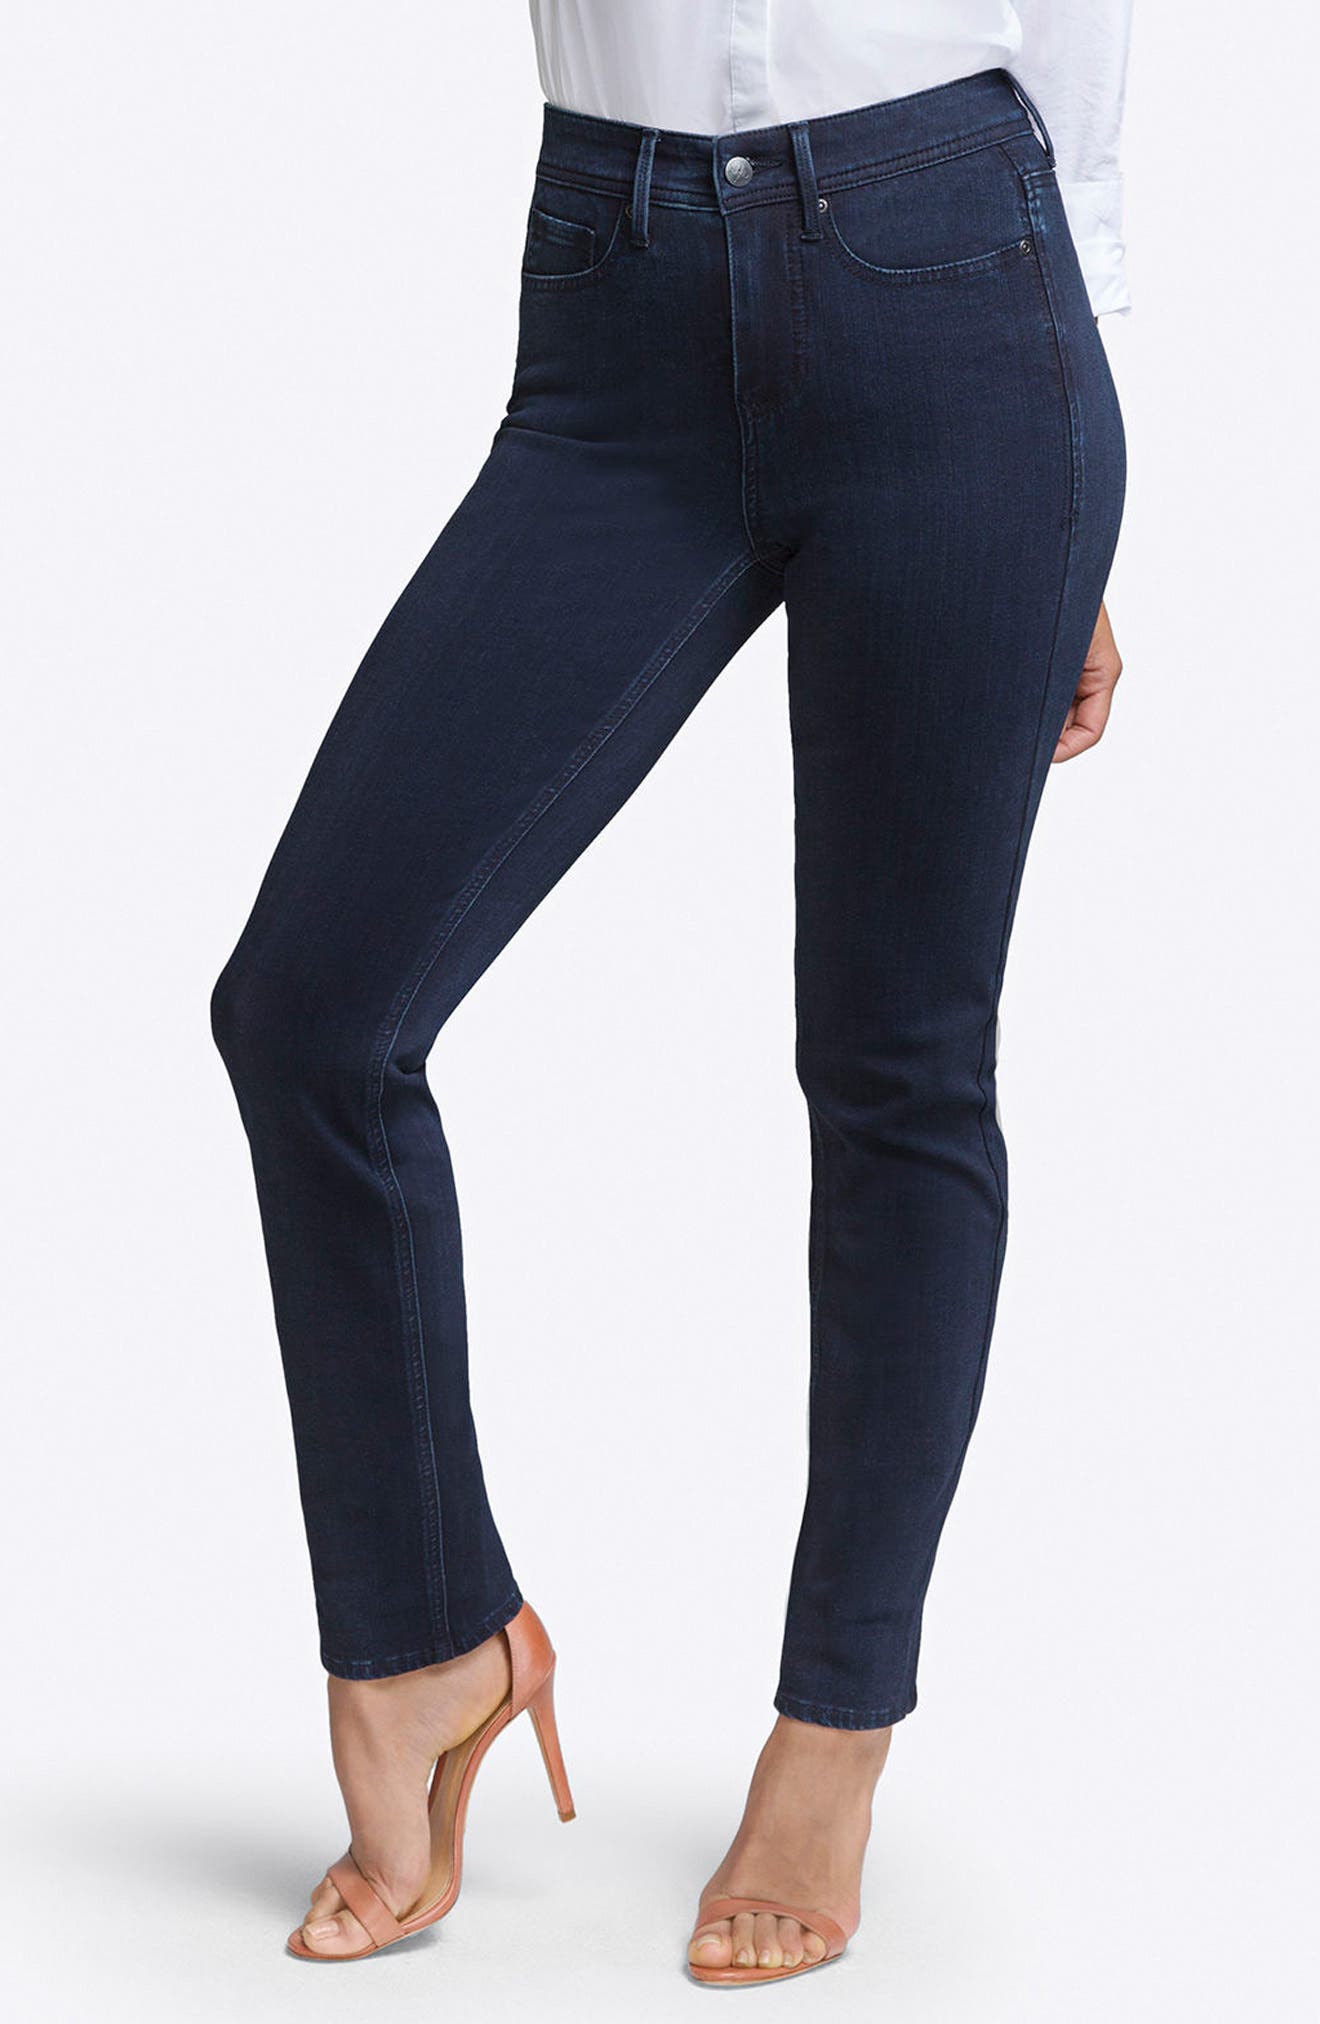 nydj jeans curves 360